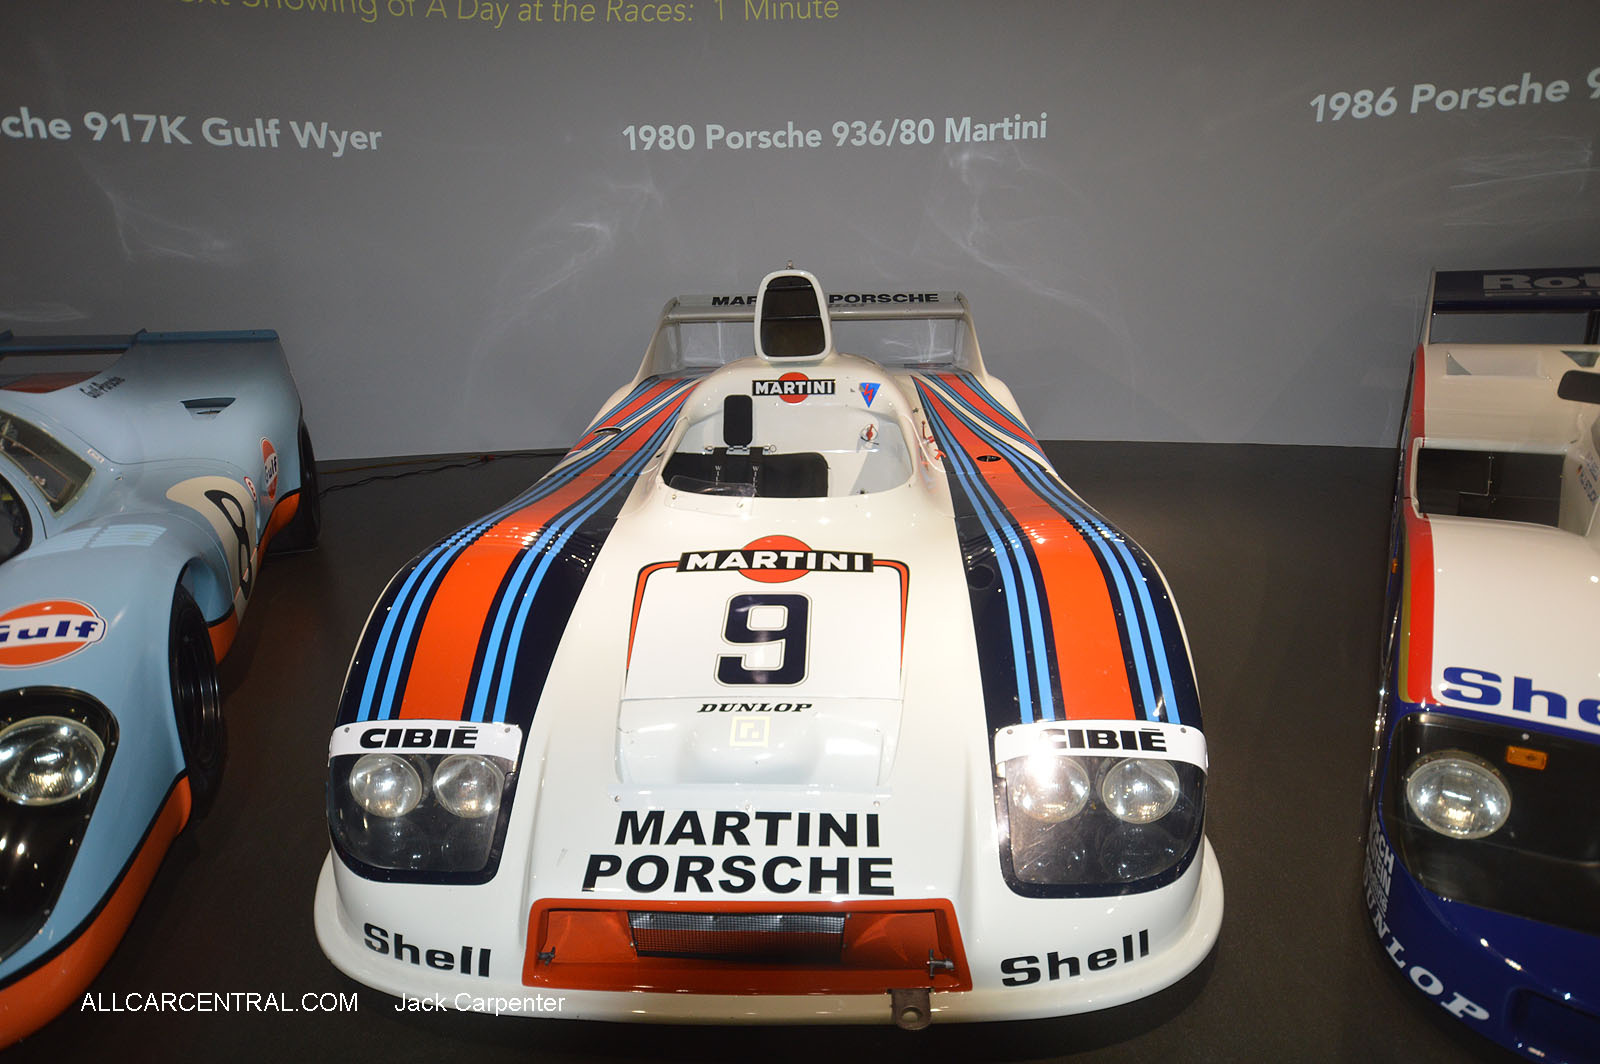   Porsche 936-4 1980  Petersen Automotive 
Museum 2016